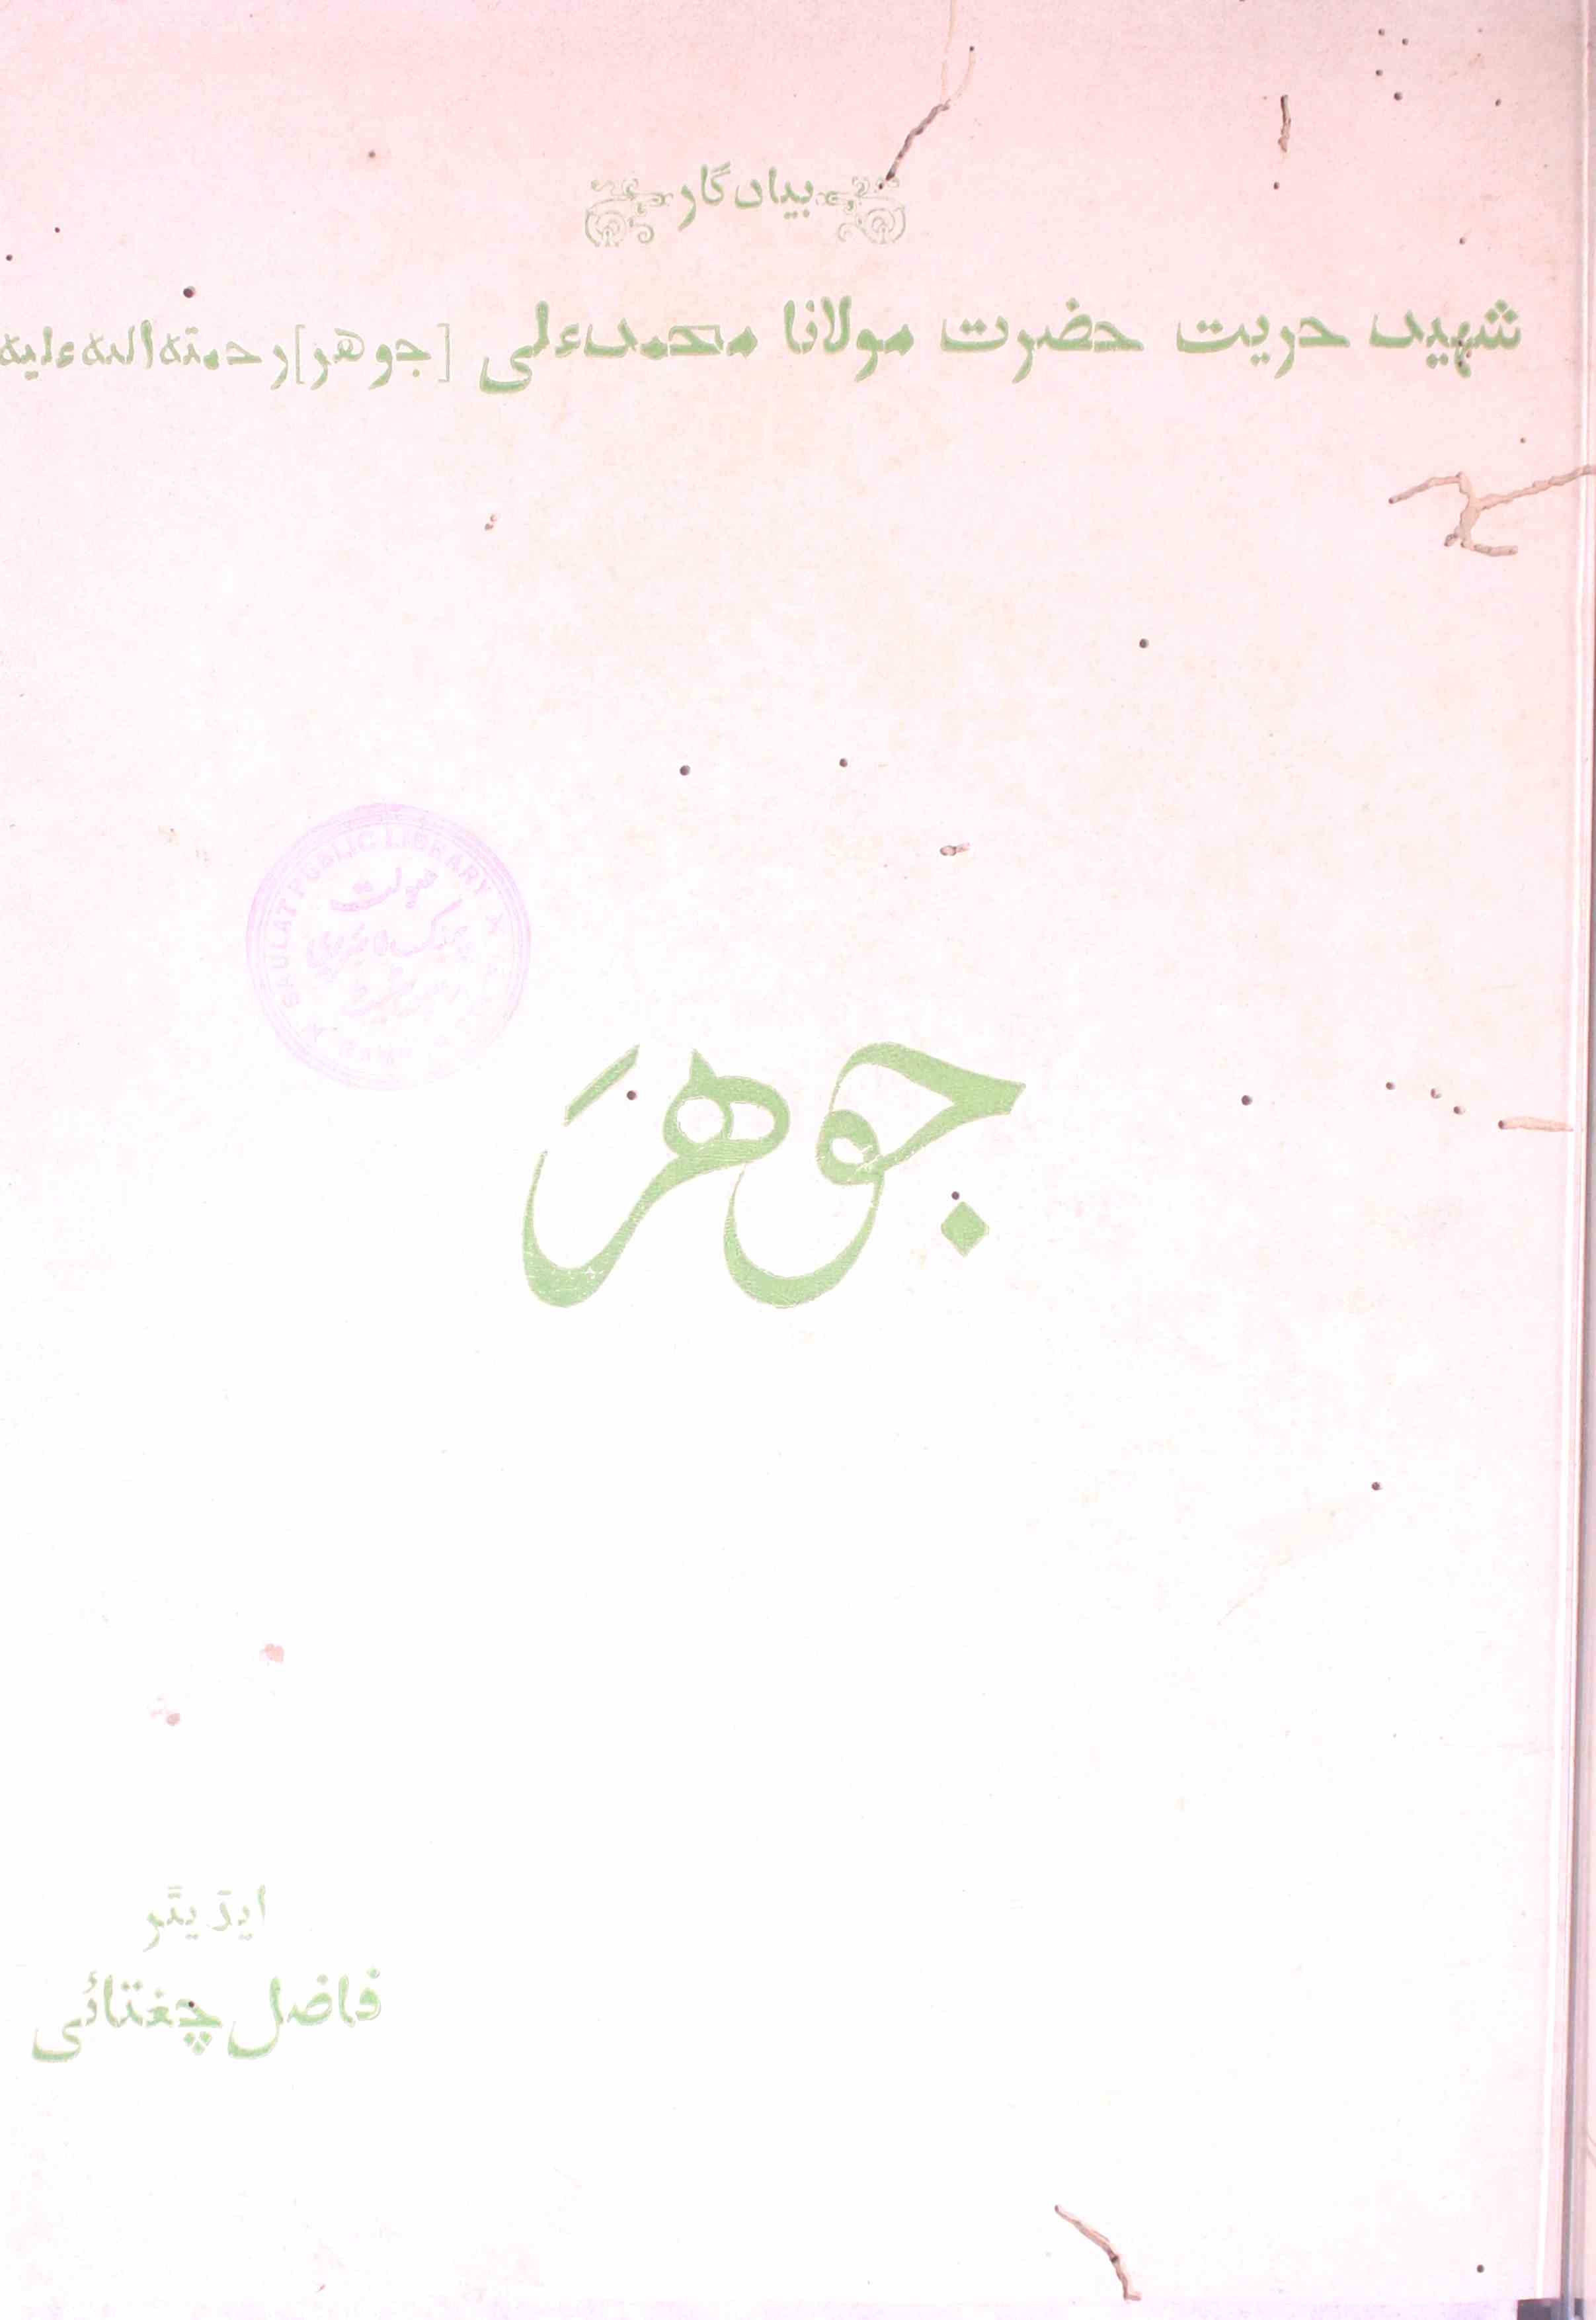 Jauhar Jild 1 No. 3 - Jan. 1933-Shumara Number-003